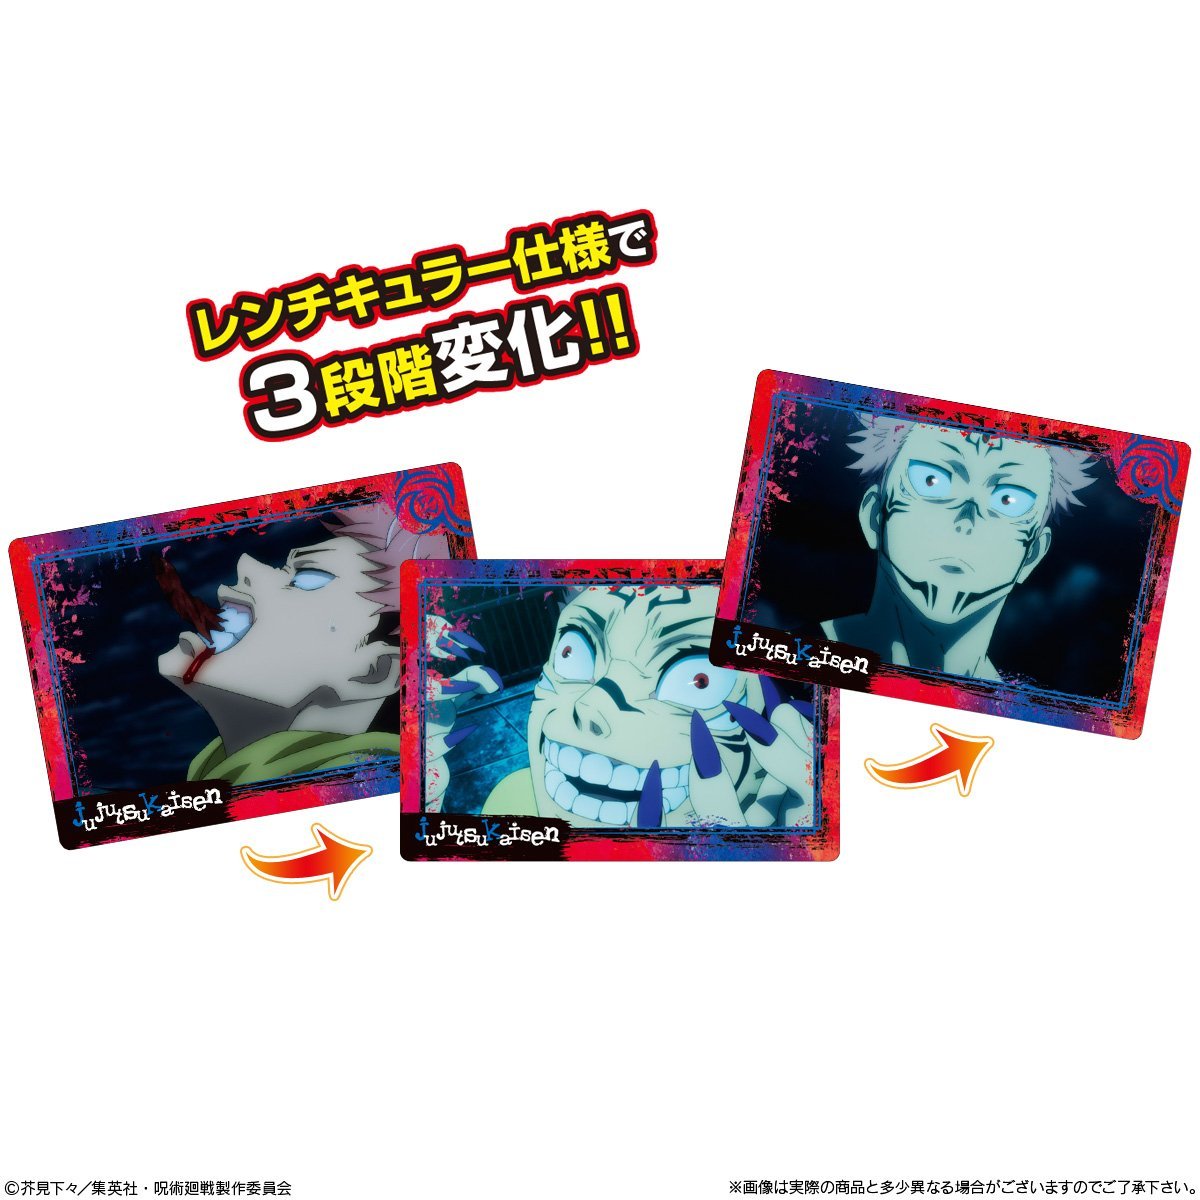 Jujutsu Kaisen -Play Back Card- Chocolate Snack-Single Pack (Random)-Bandai-Ace Cards &amp; Collectibles